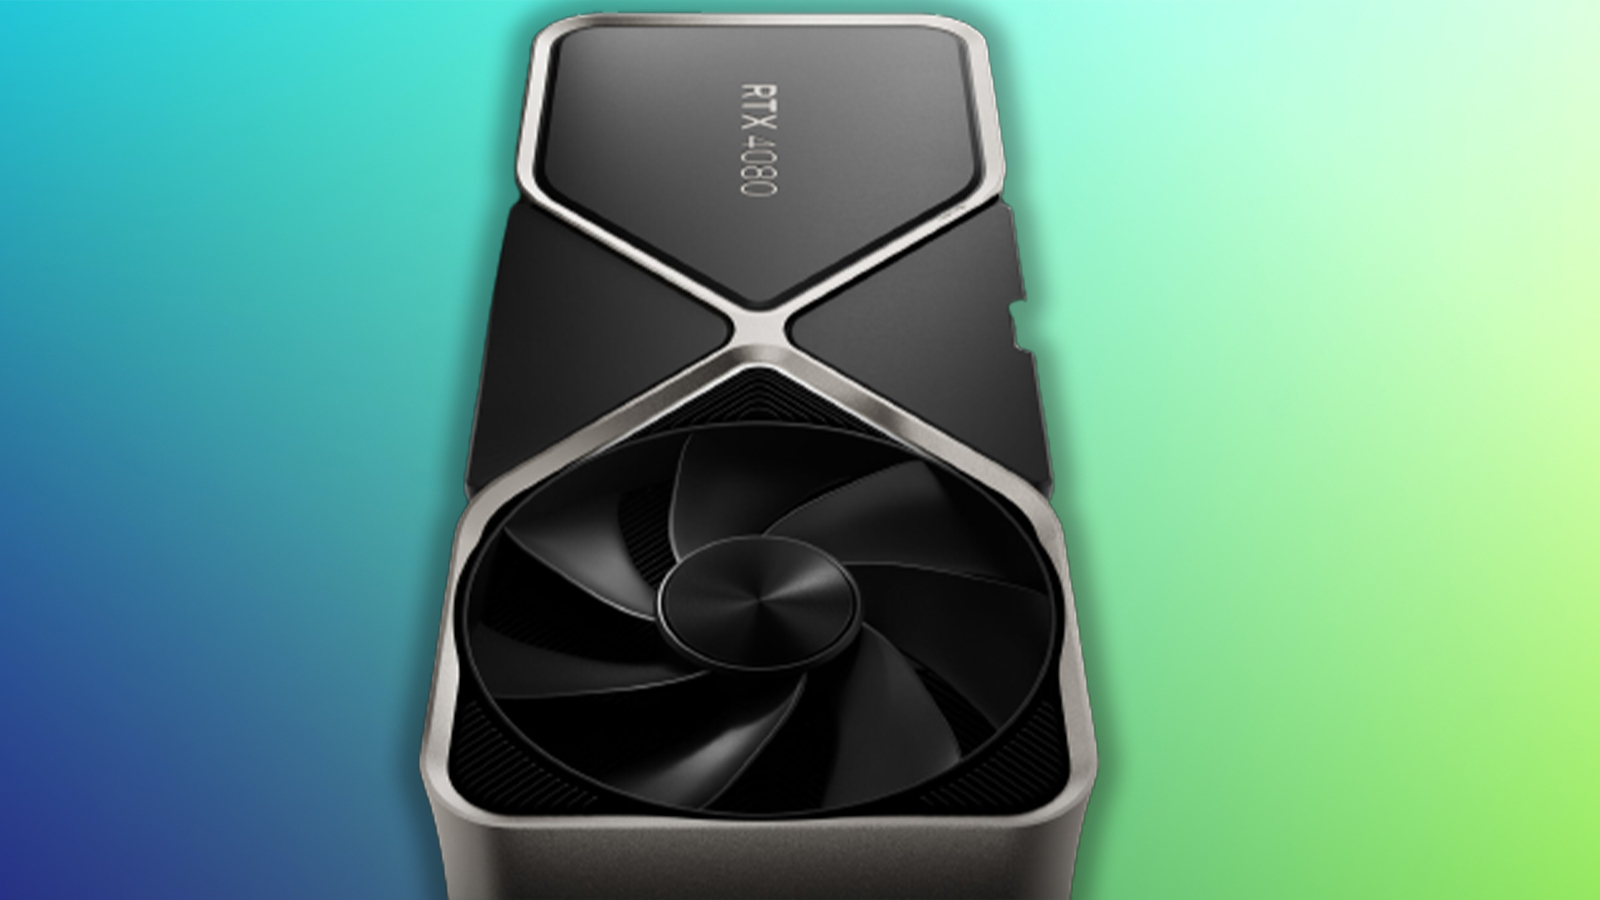 Where to buy the Nvidia RTX 4080 Super: Price, release date & specs -  Dexerto